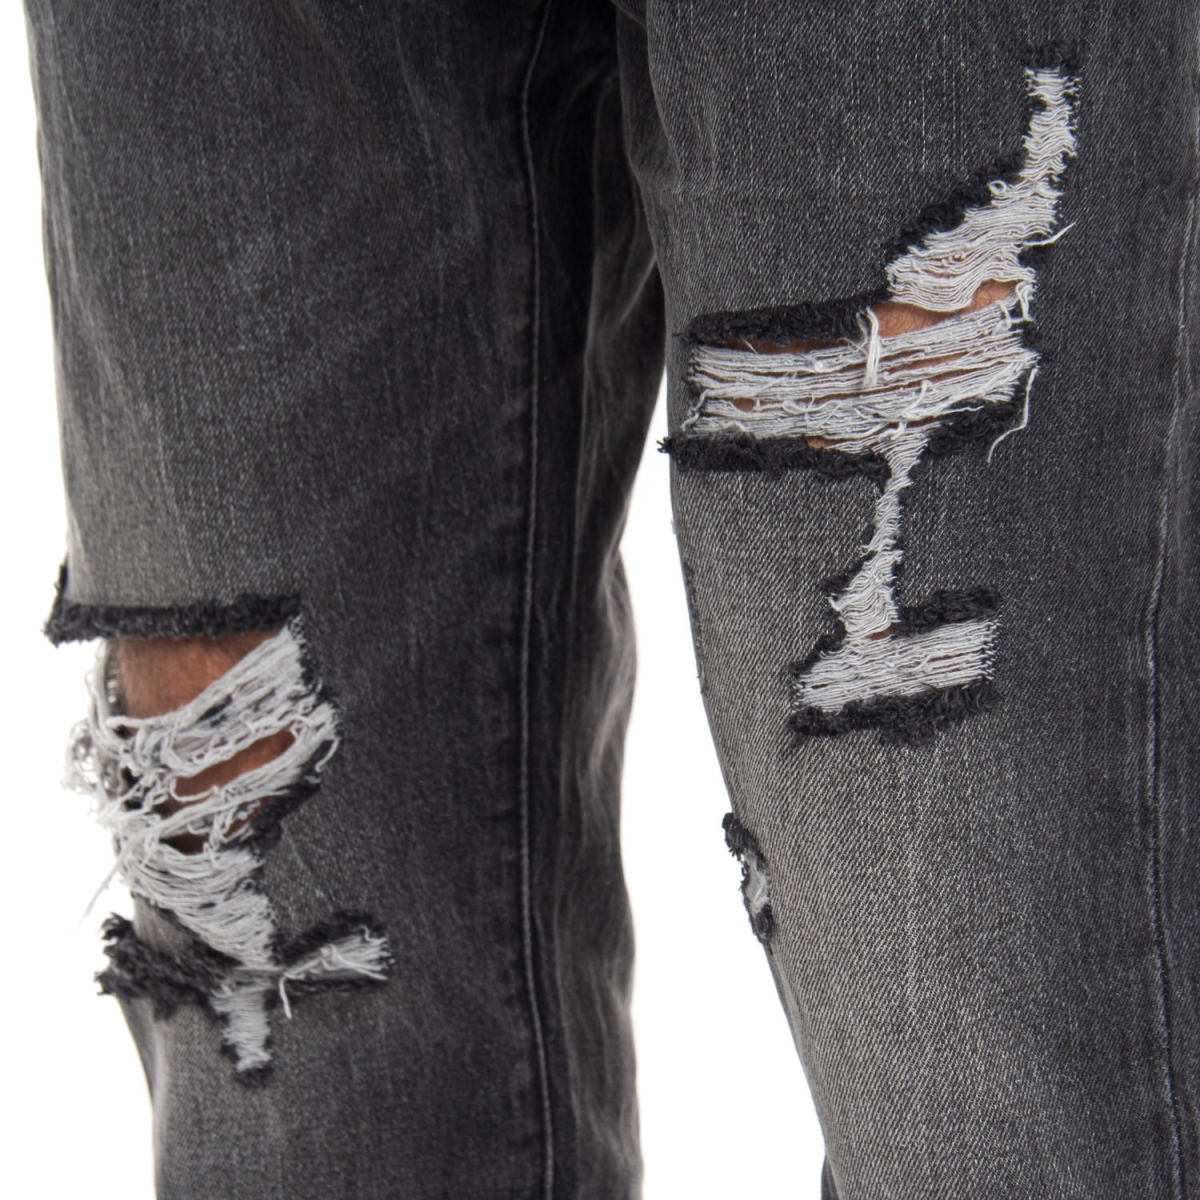 Kleidung Jeans mann Jeans LPY1802 LANDEK PARK Cafedelmar Shop